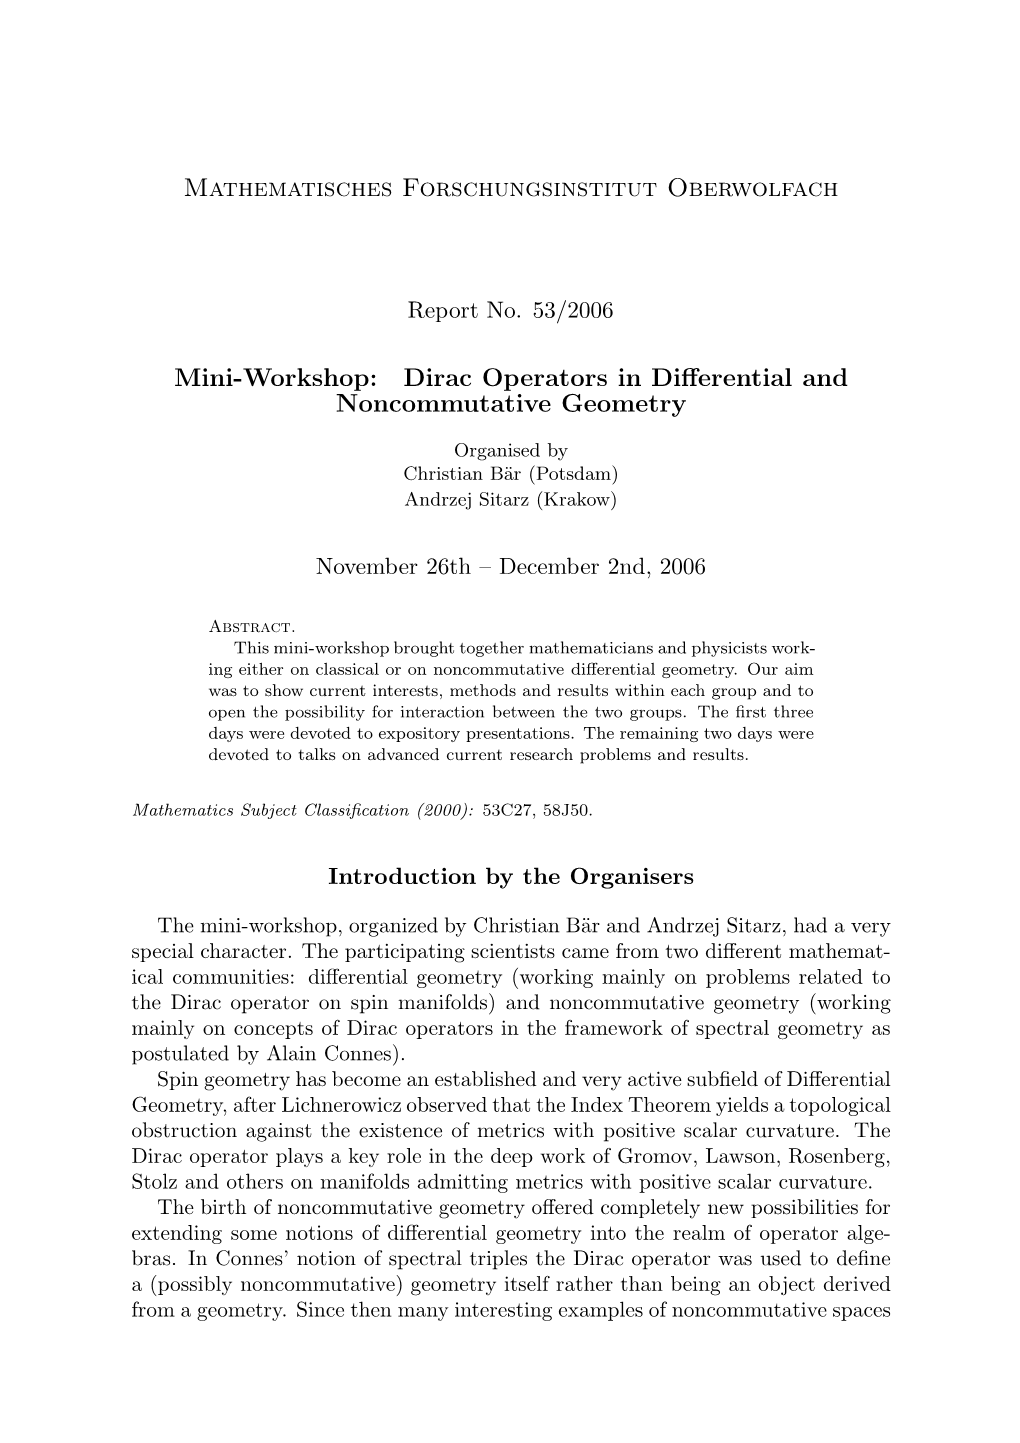 Dirac Operators in Differential and Noncommutative Geometry